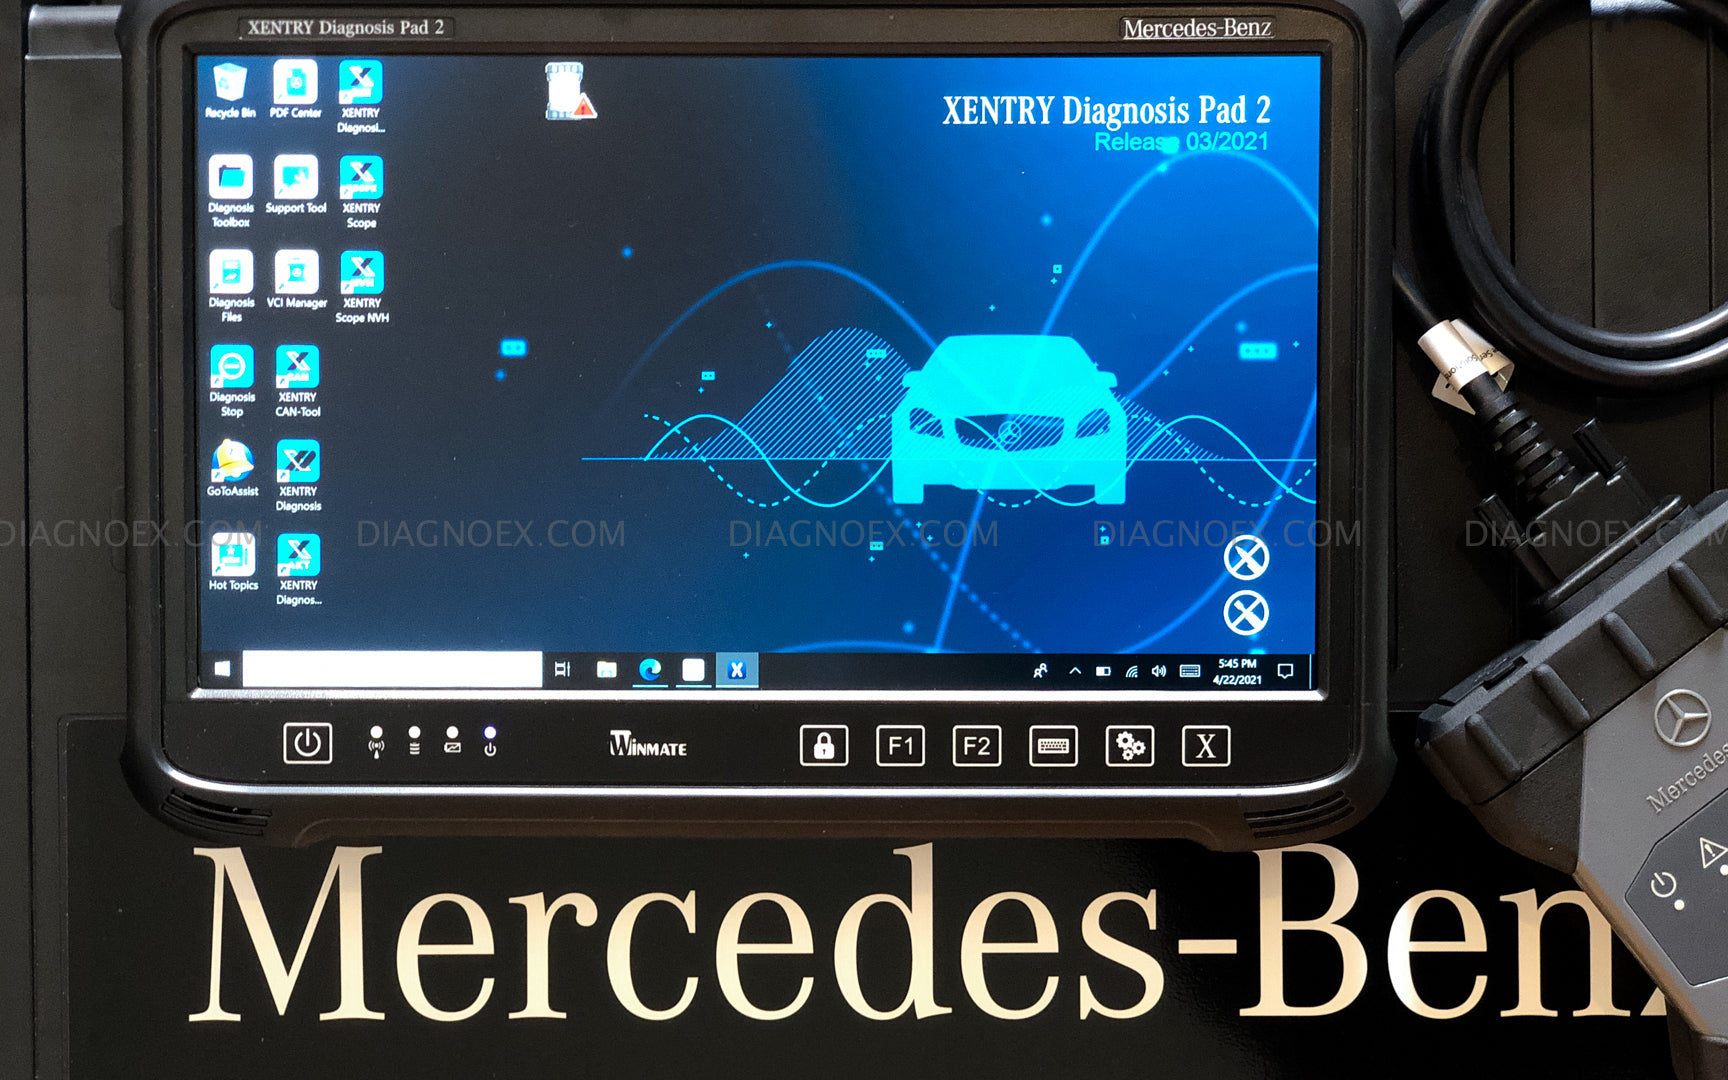 Mercedes XENTRY Diagnosis Kit 4 Diagnostic Scan Tool Diagnoex USA